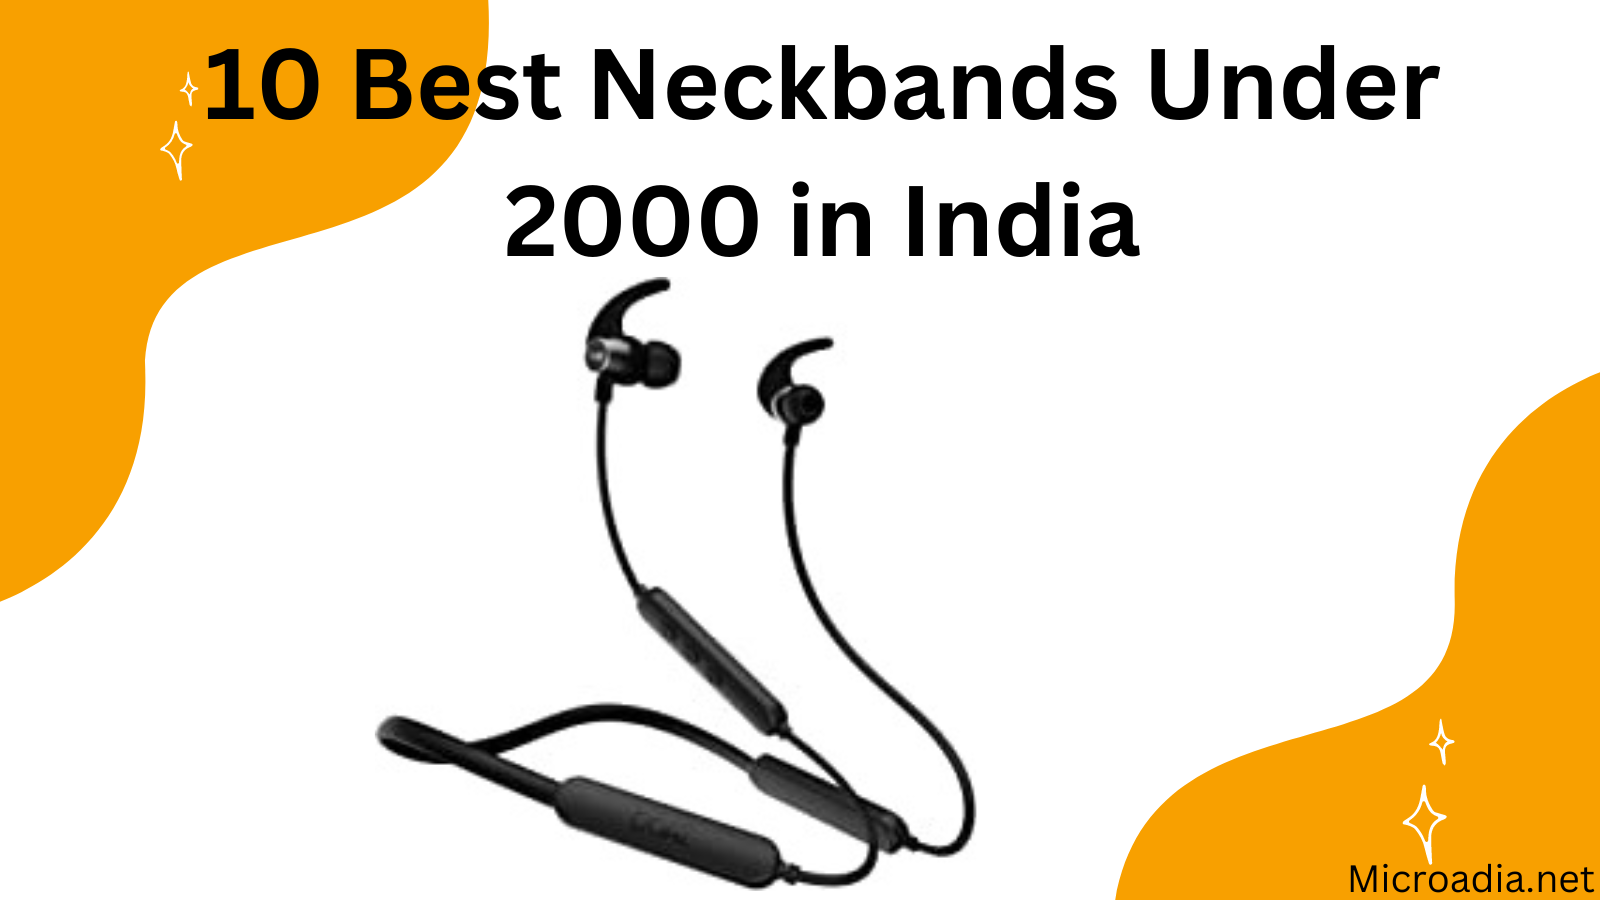 10 Best Neckbands Under 2000 in India